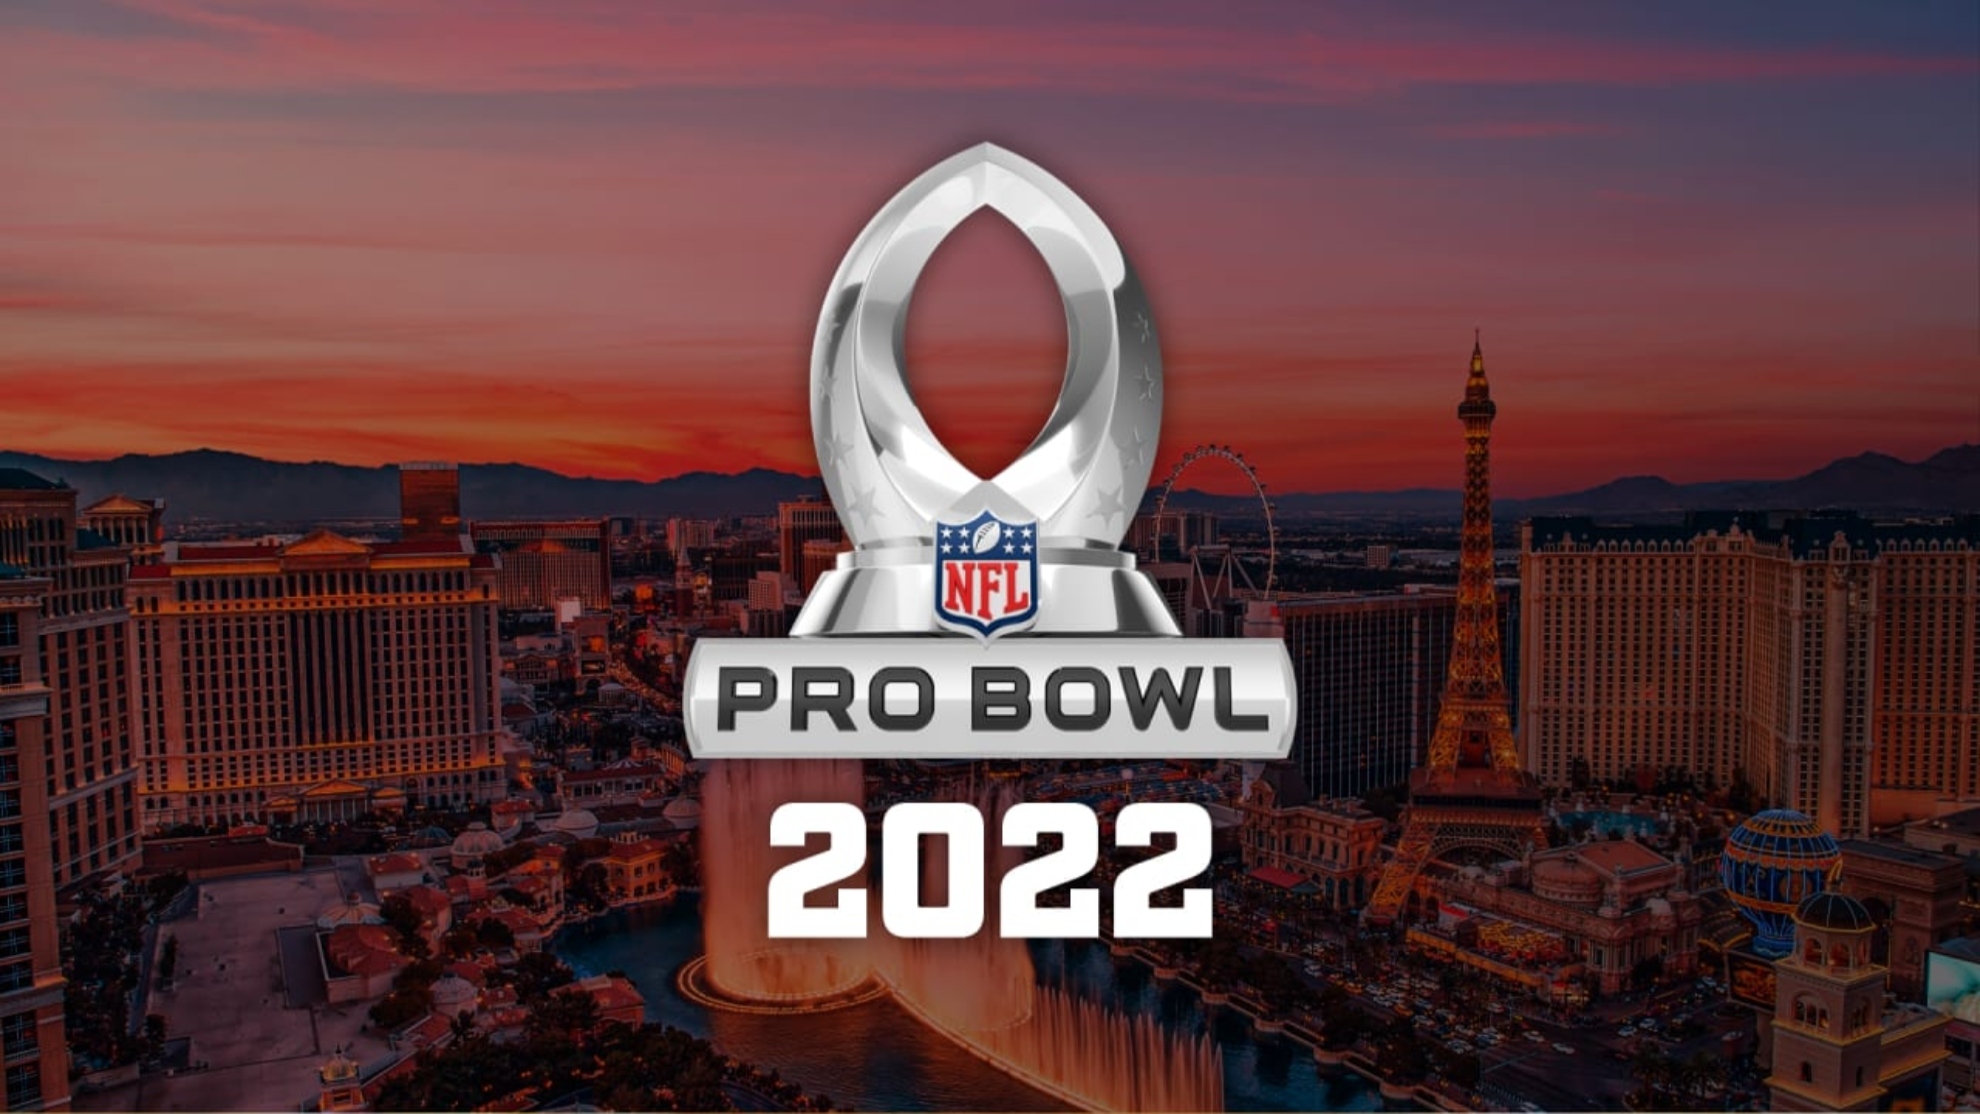 NFL Pro Bowl 2022: Patrick Mahomes main Pro Bowl attraction of 2022